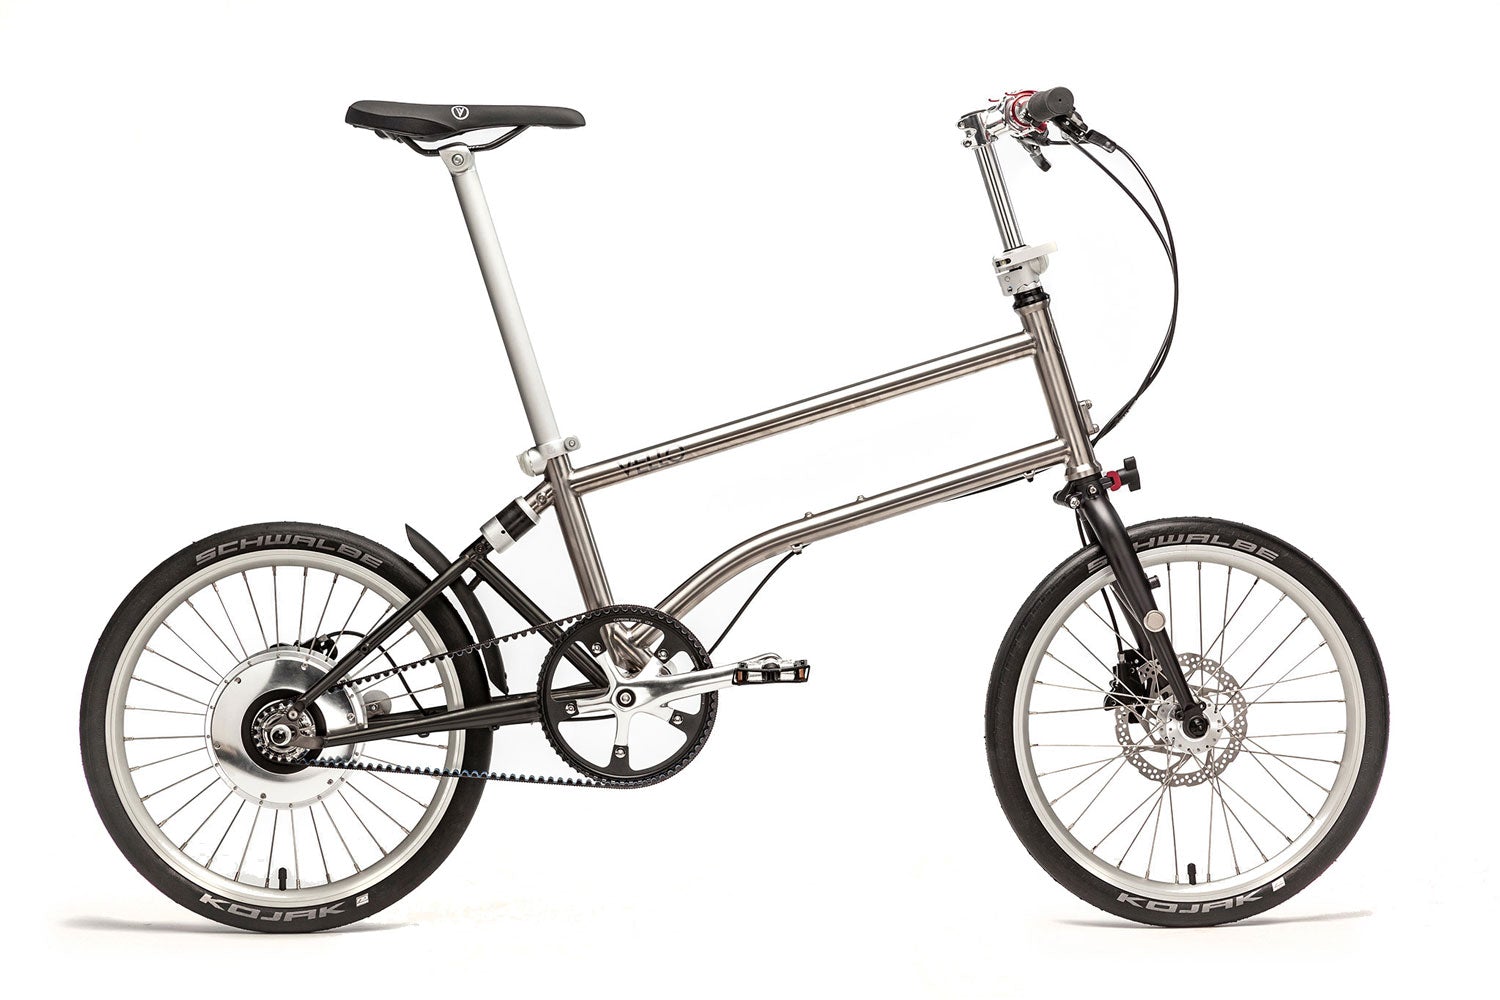 VELLO BIKE+ TITANIUM - The lightest Electric Folding Bike - Under 13kg - Buy online now